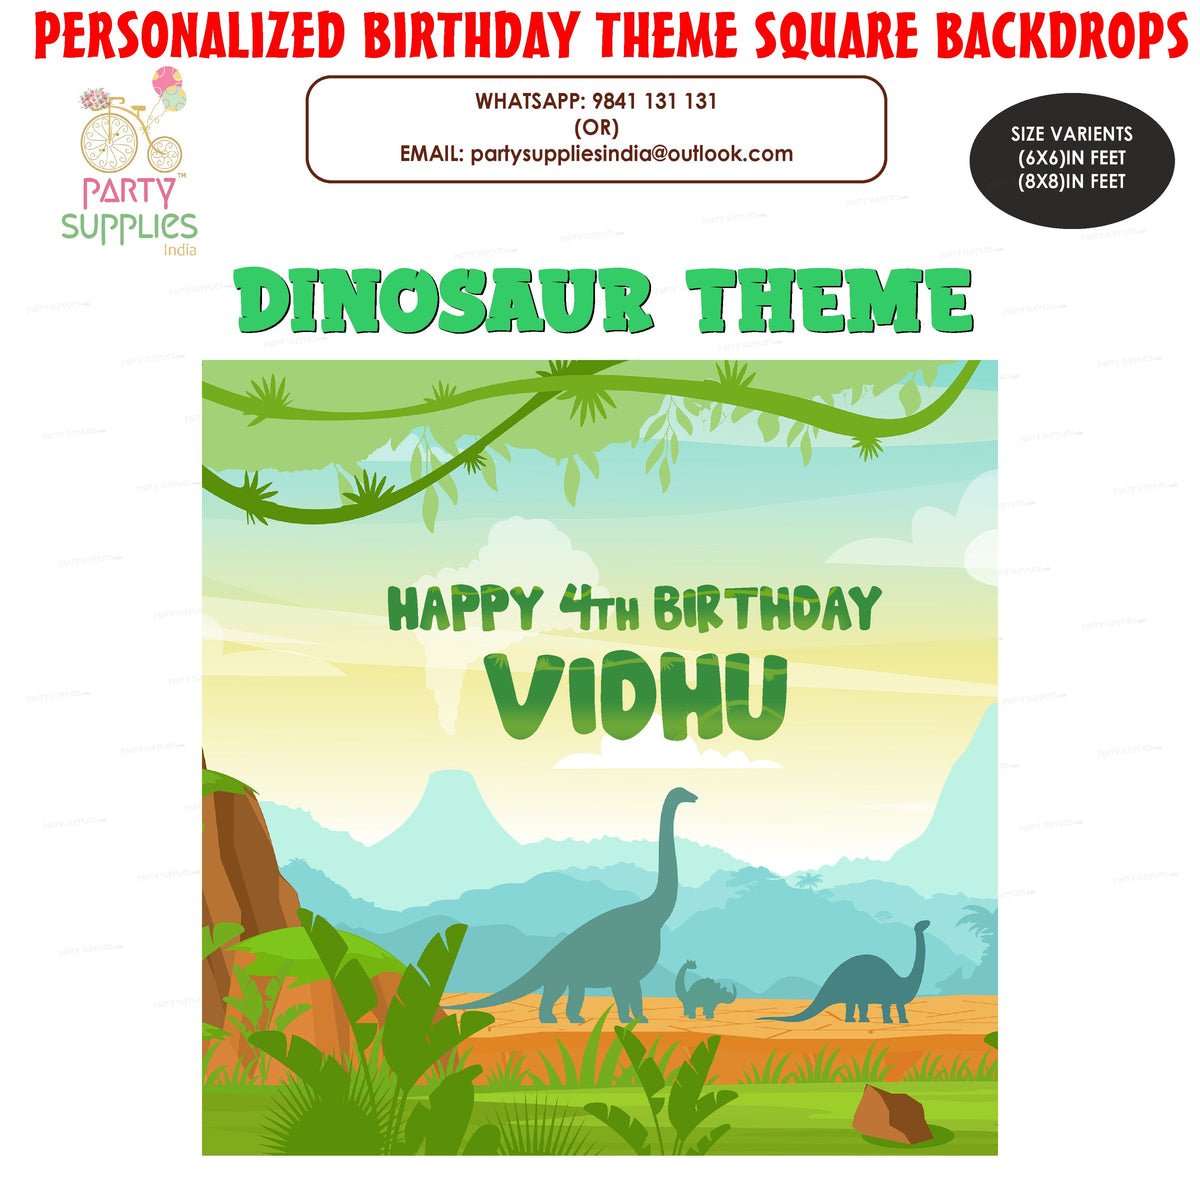 PSI Dinosaur Theme Customized Square Backdrop